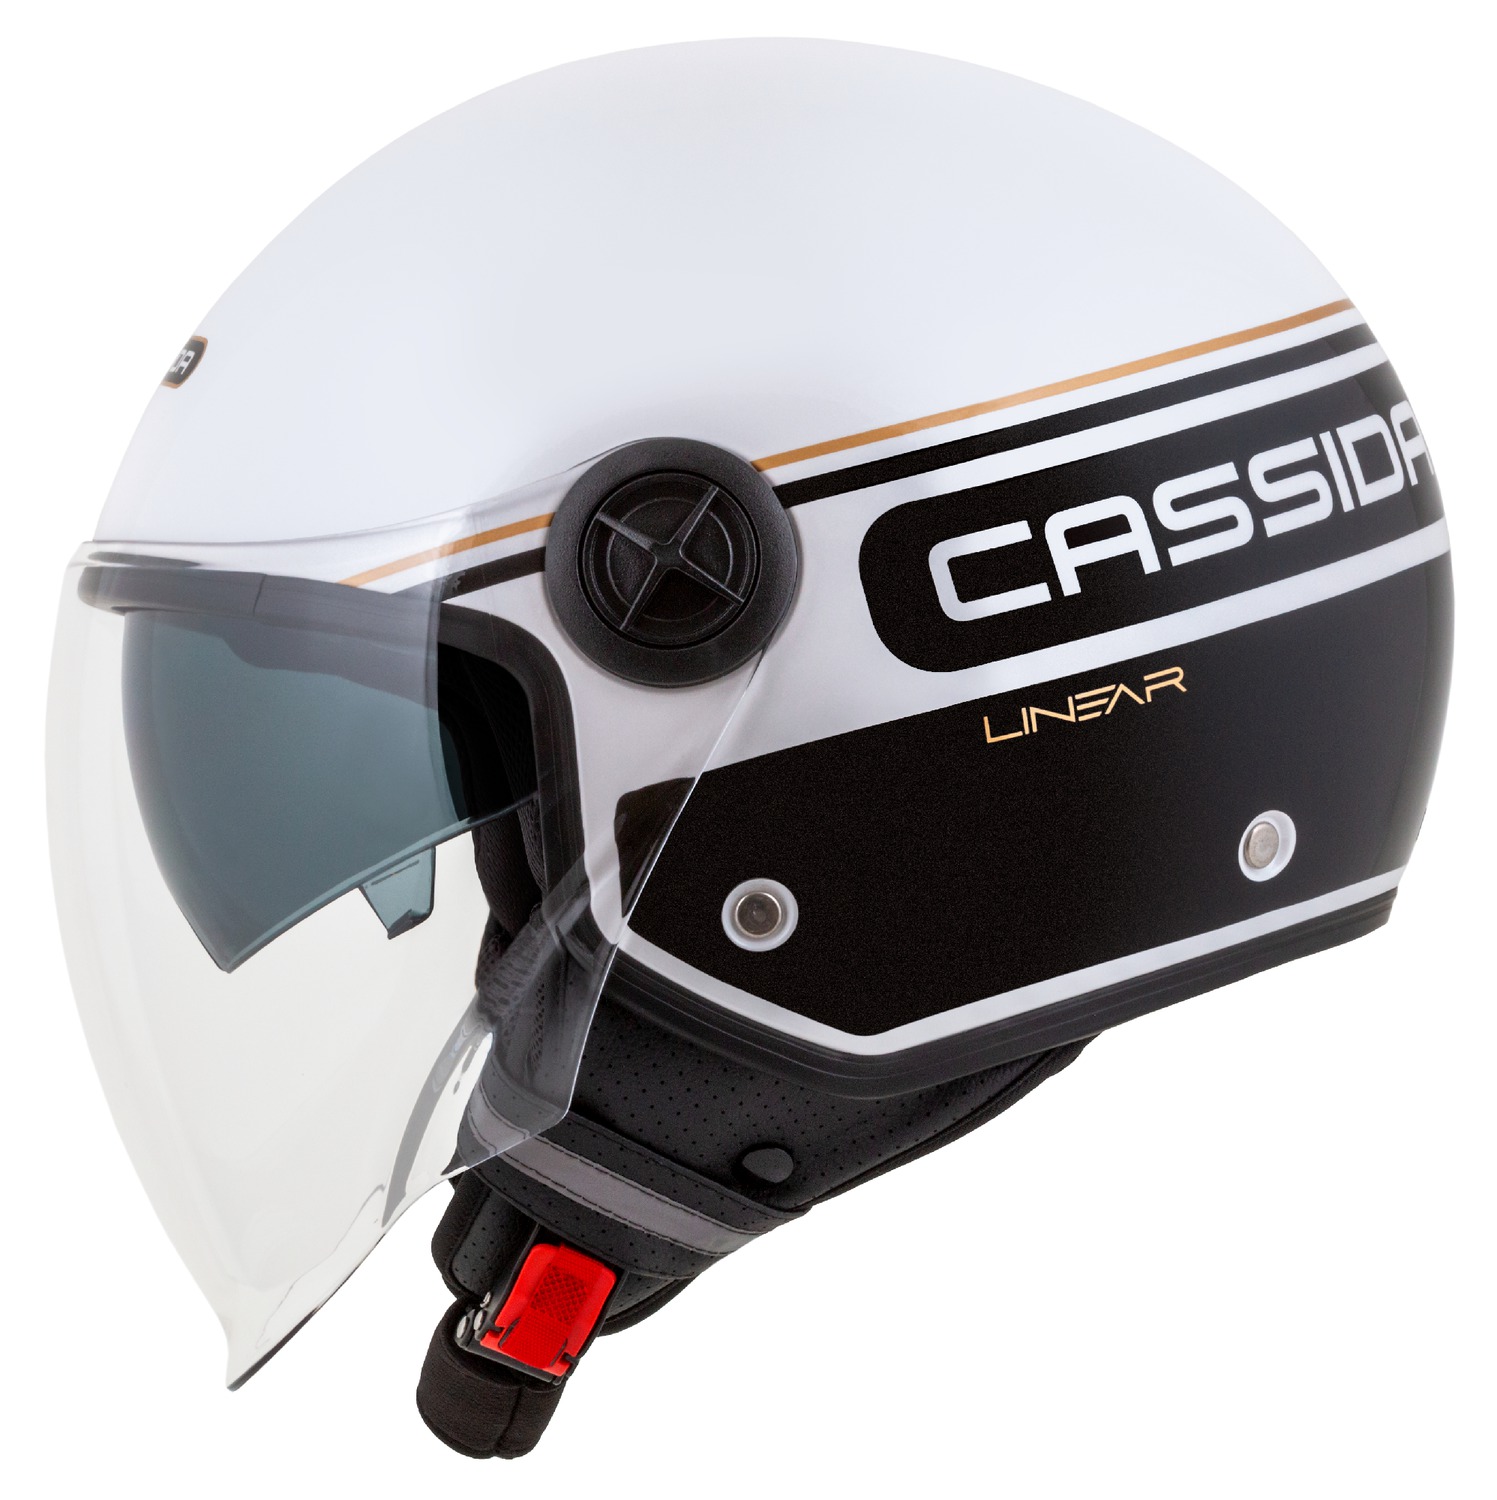 helmet Handy Plus Linear, CASSIDA (pearl white/black/gold) 2023